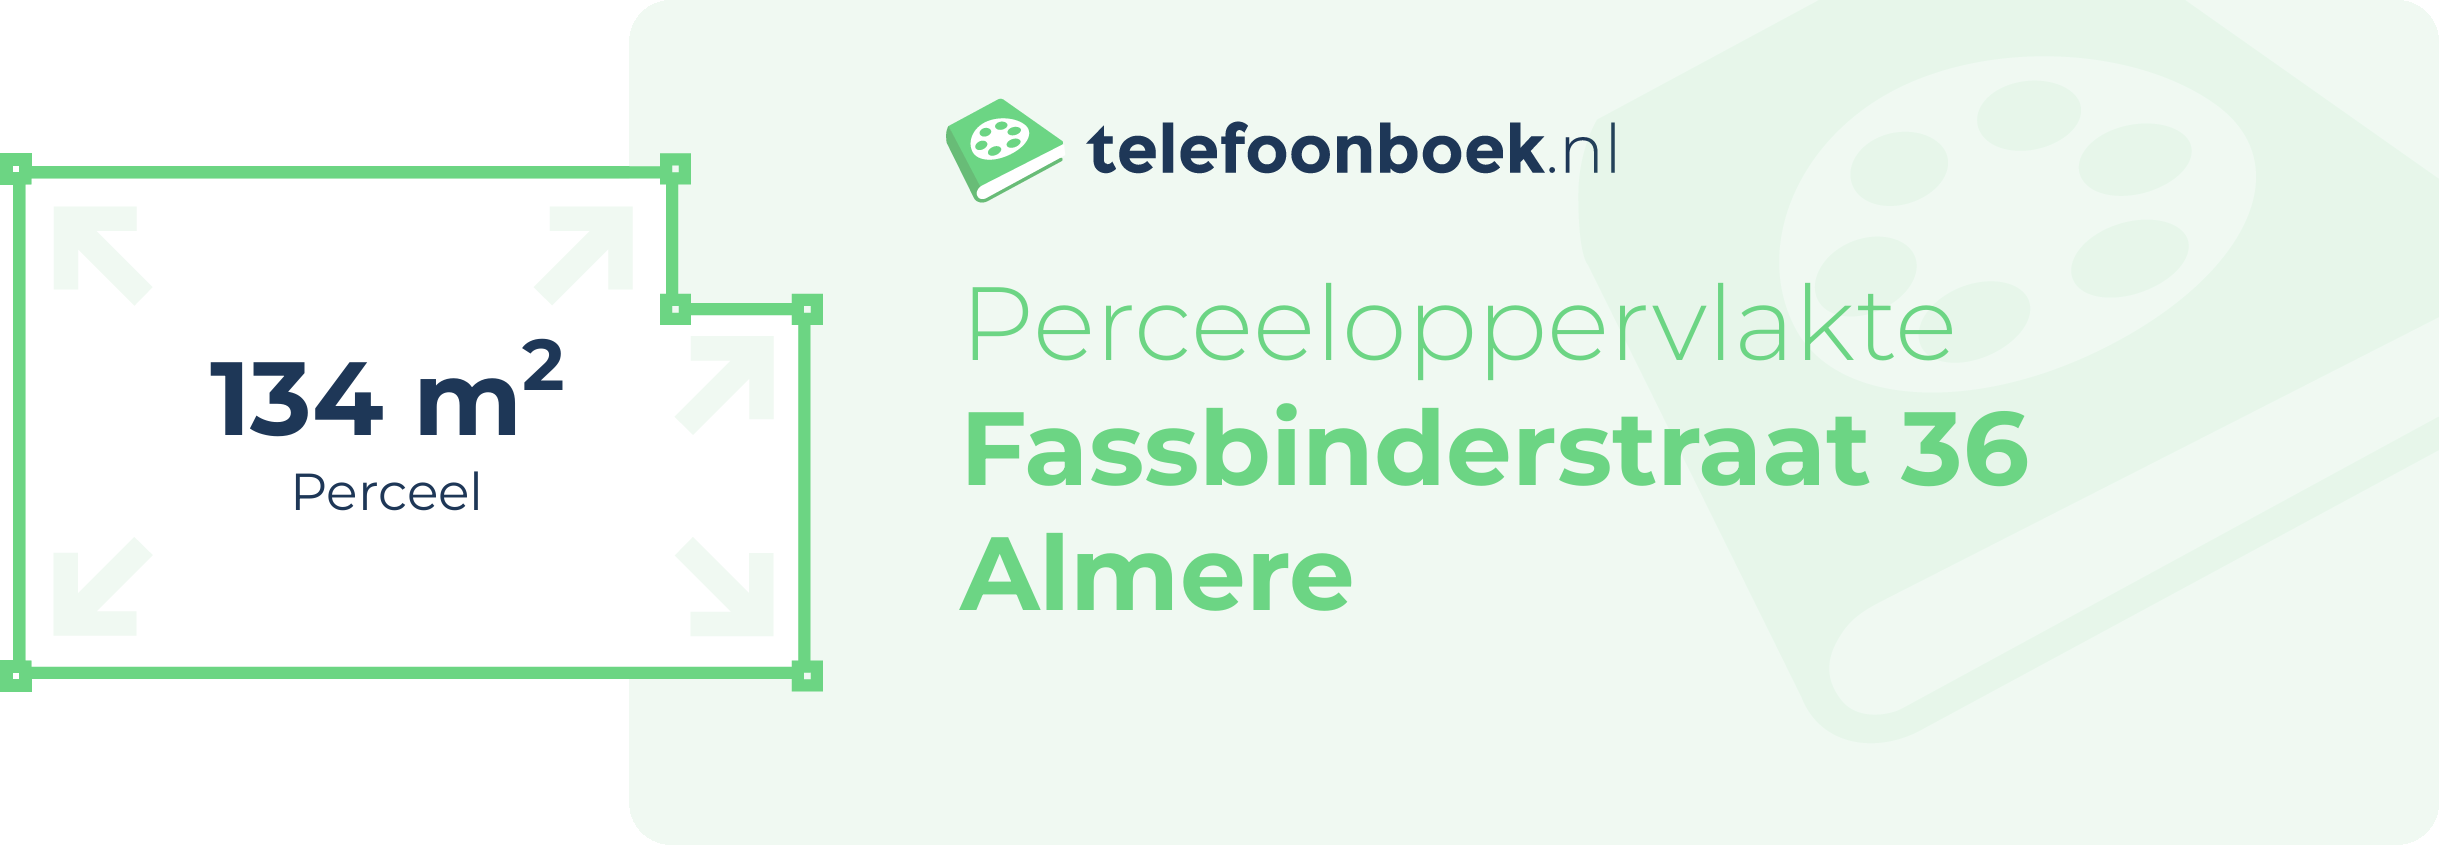 Perceeloppervlakte Fassbinderstraat 36 Almere